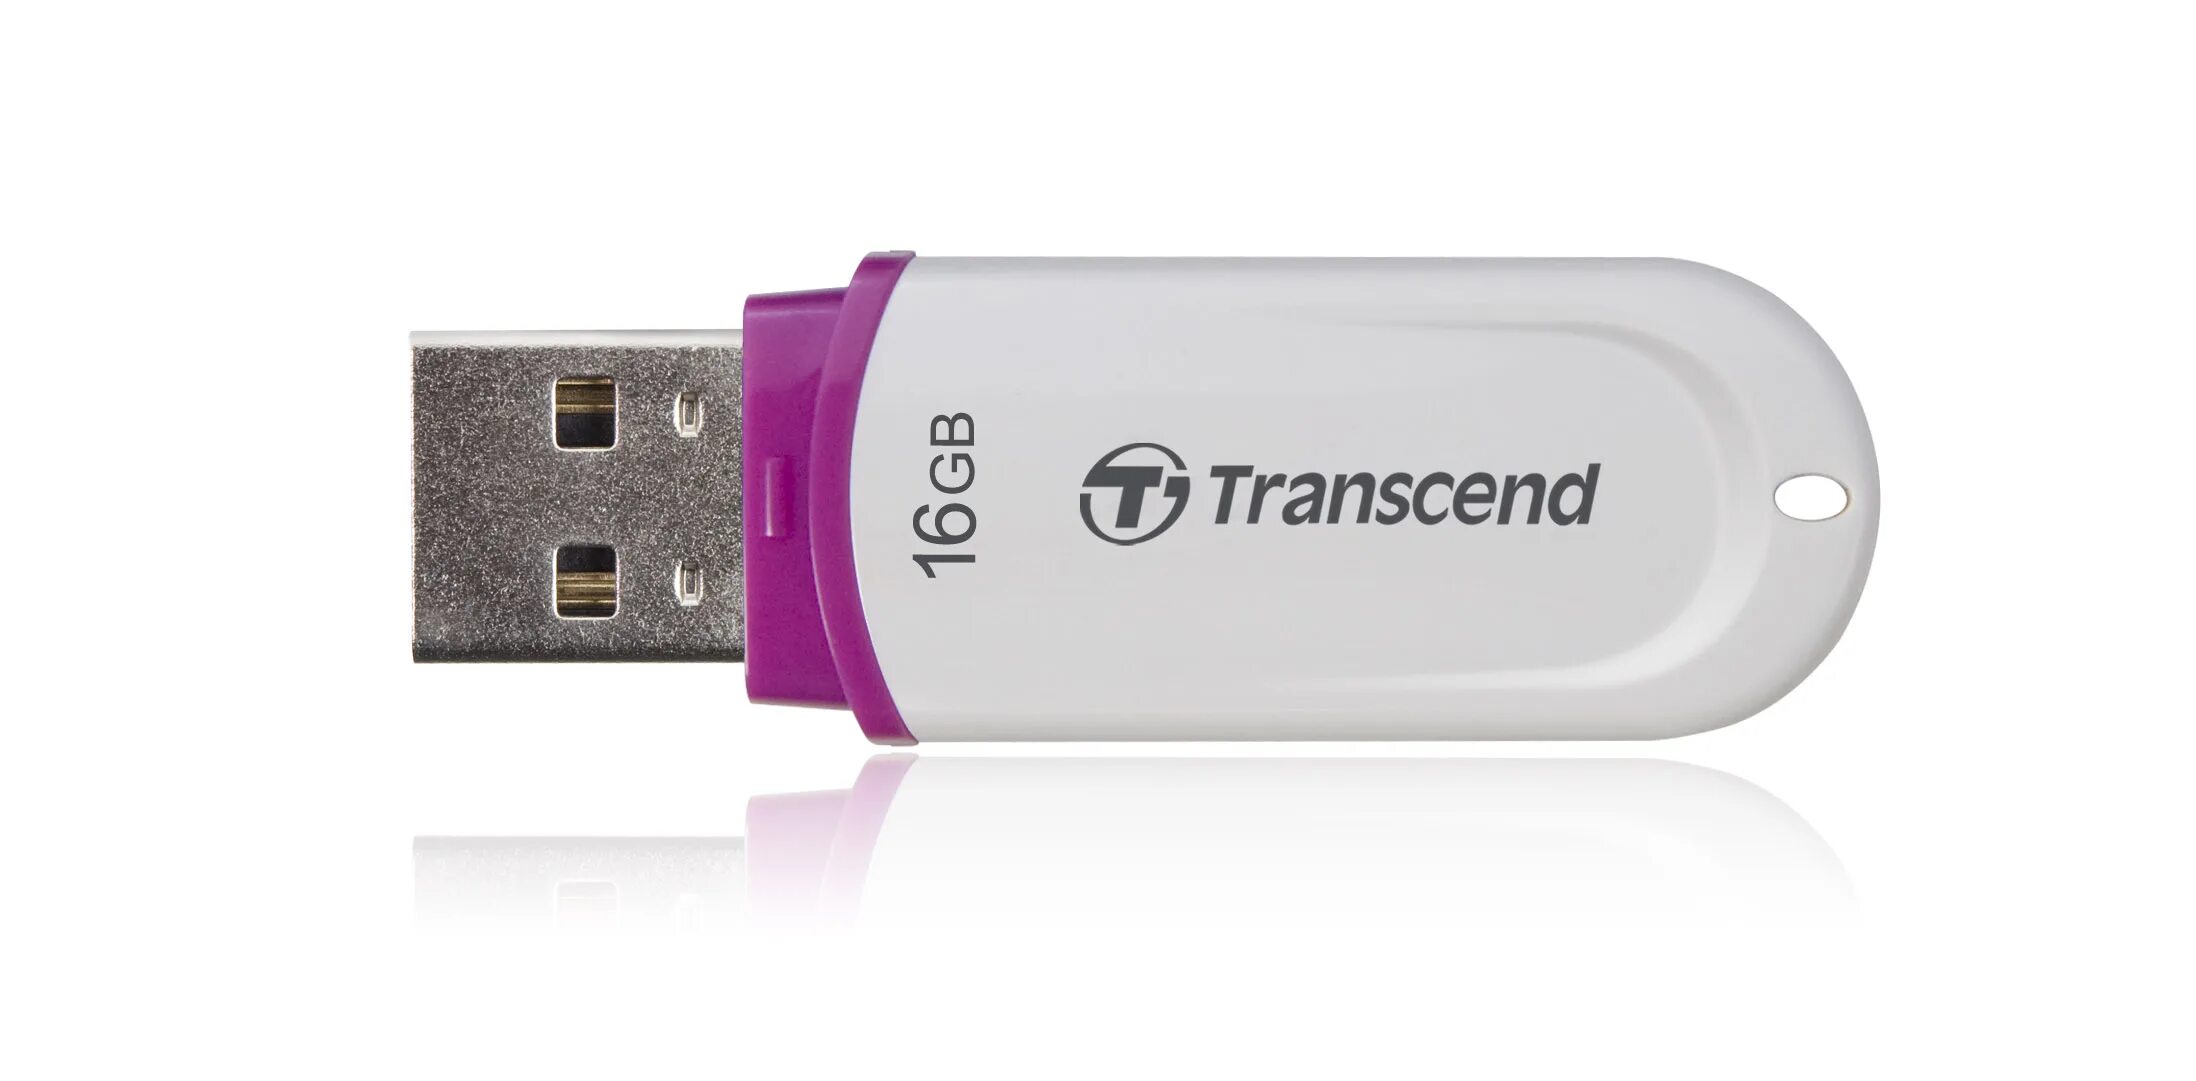 Флешка Transcend 8 GB. Transcend JETFLASH 330 8gb. USB Stick 16 GB Transcend. Transcend JETFLASH 16gb USB 2.0. Восстановление флешки transcend